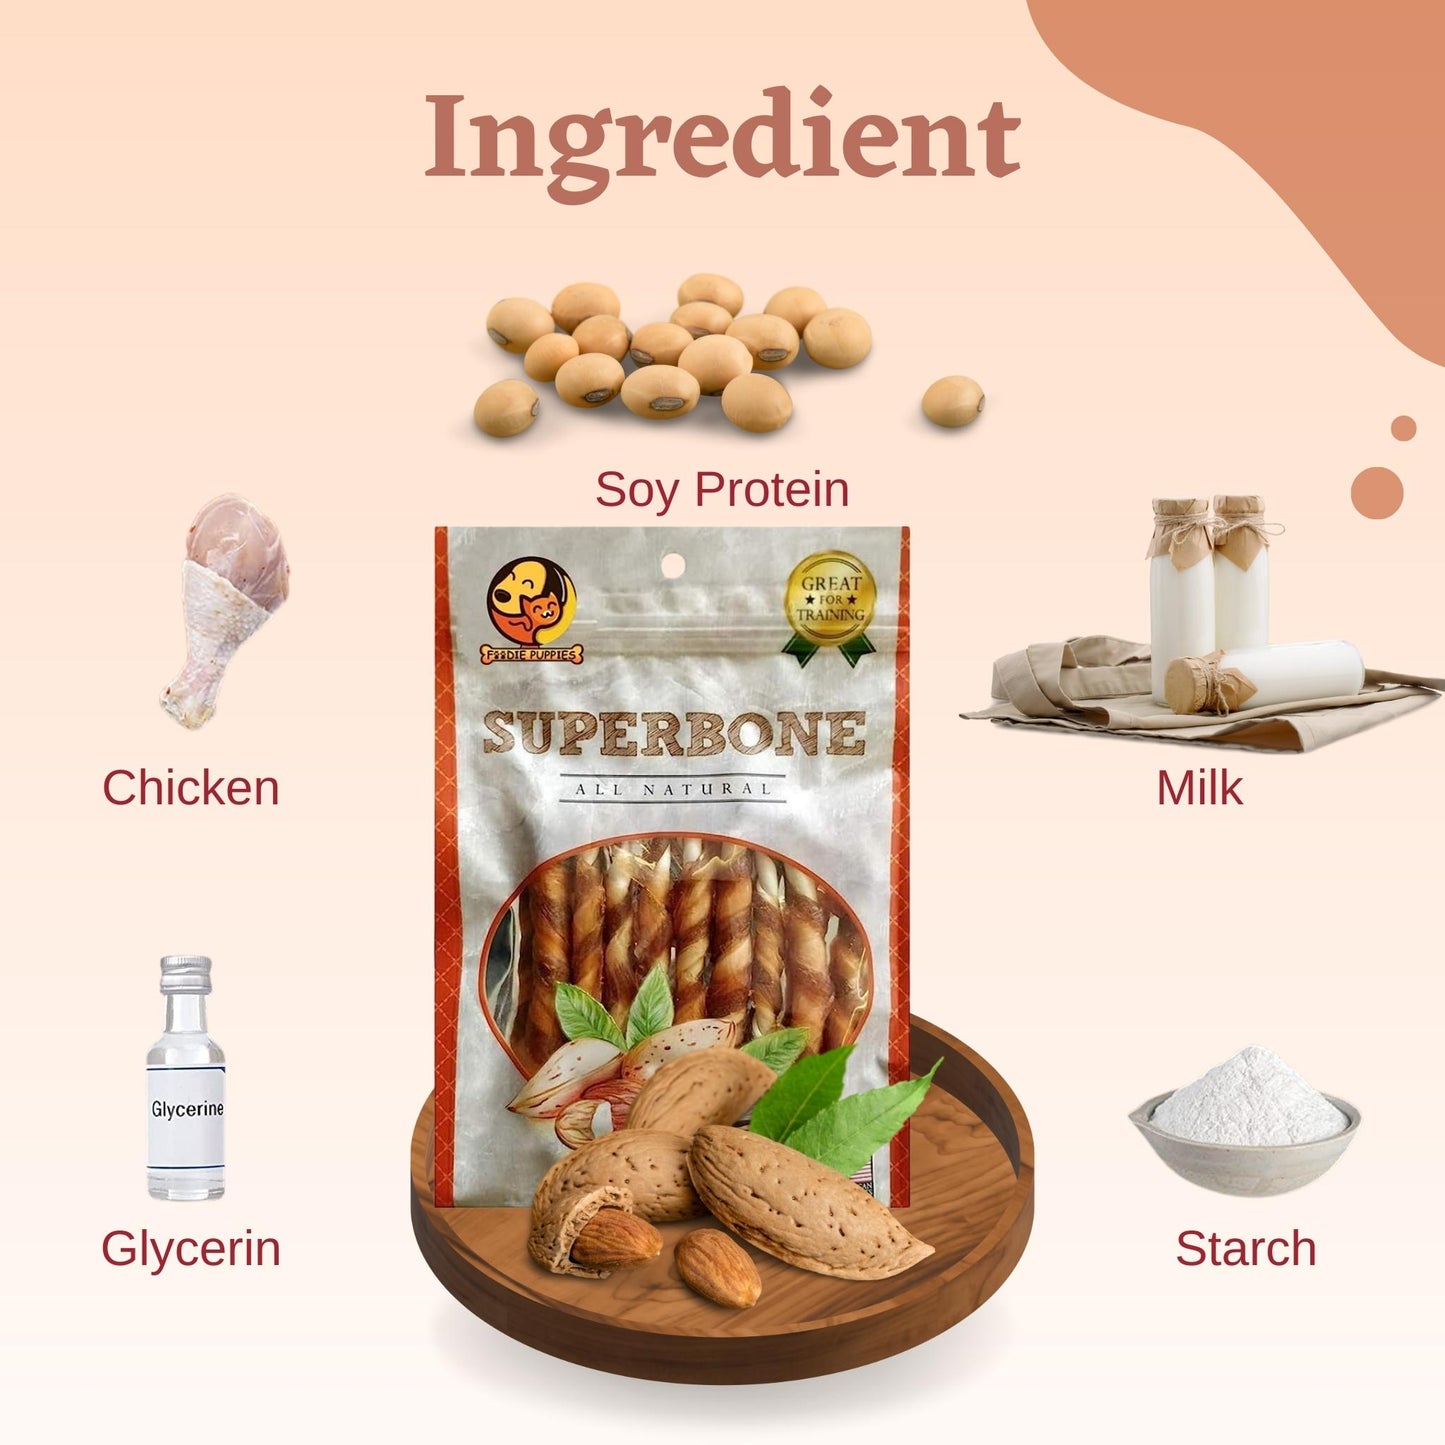 SuperBone All Natural Almond Oil Stick Dog Treat - Pack of 1